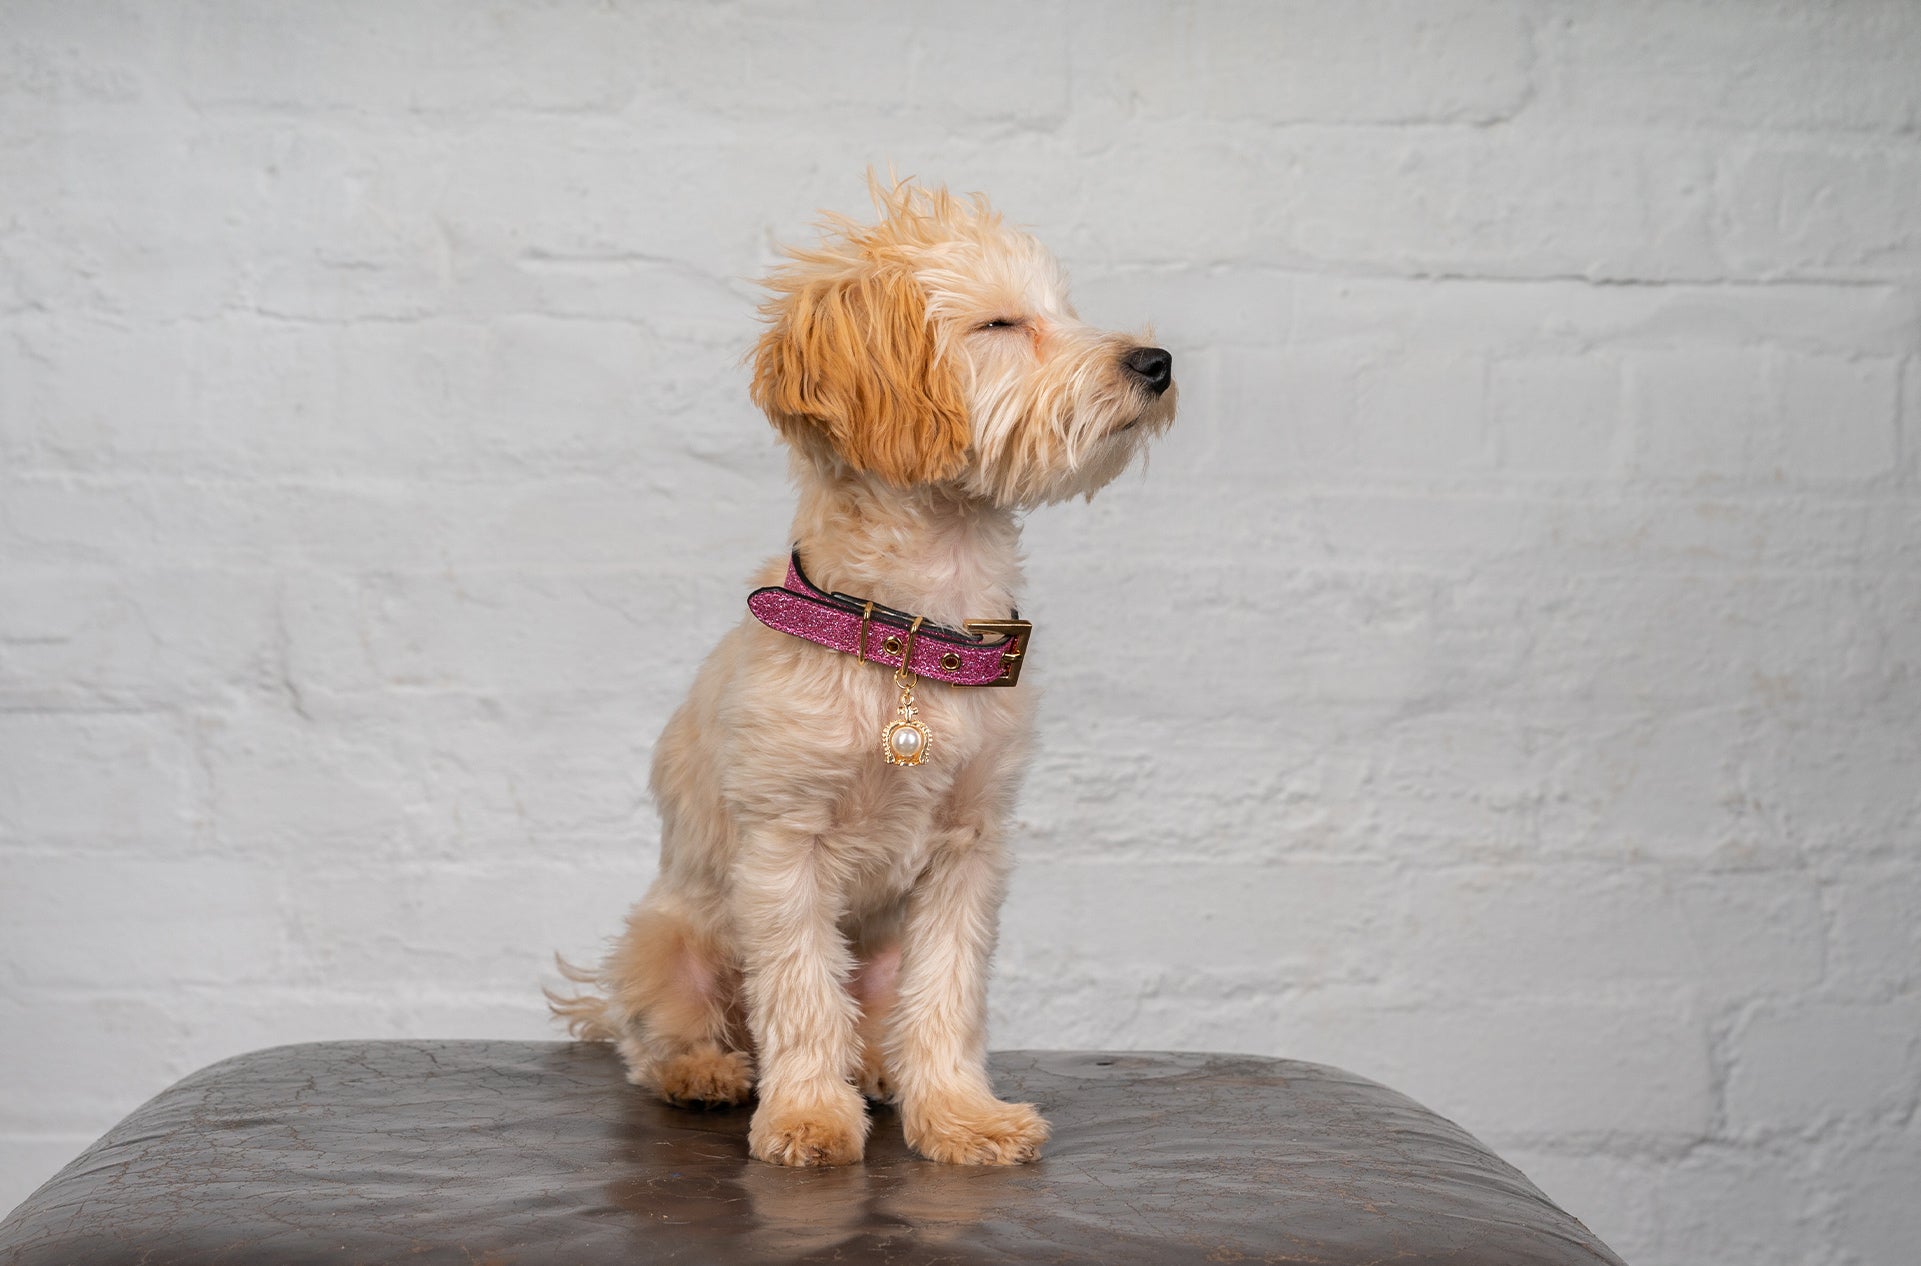 A dog posing with an OverGlam glitter collar